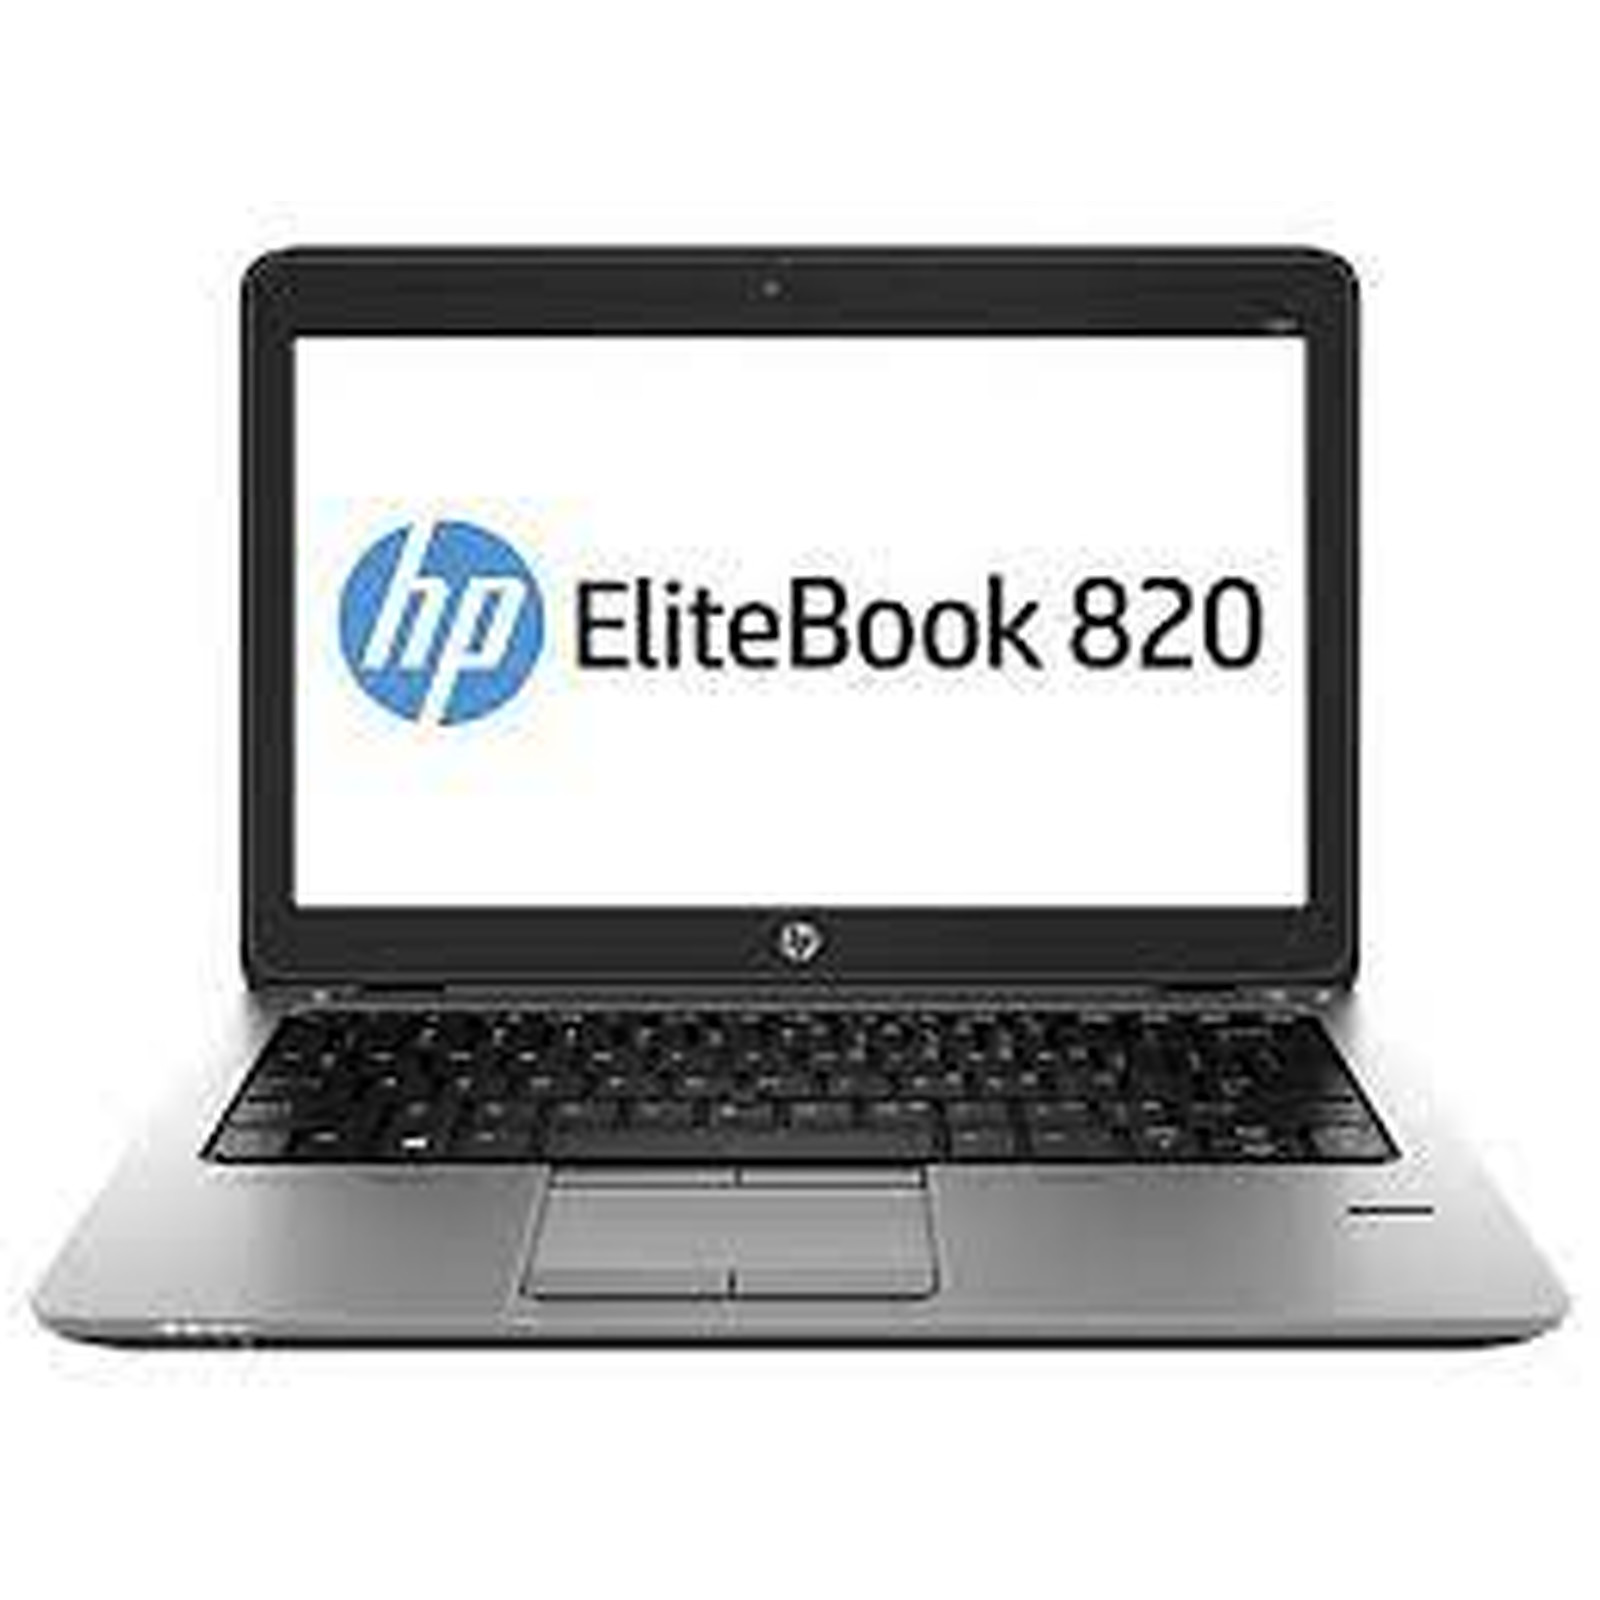 Hp EliteBook 820 G2 · Reconditionne - PC portable reconditionne HP